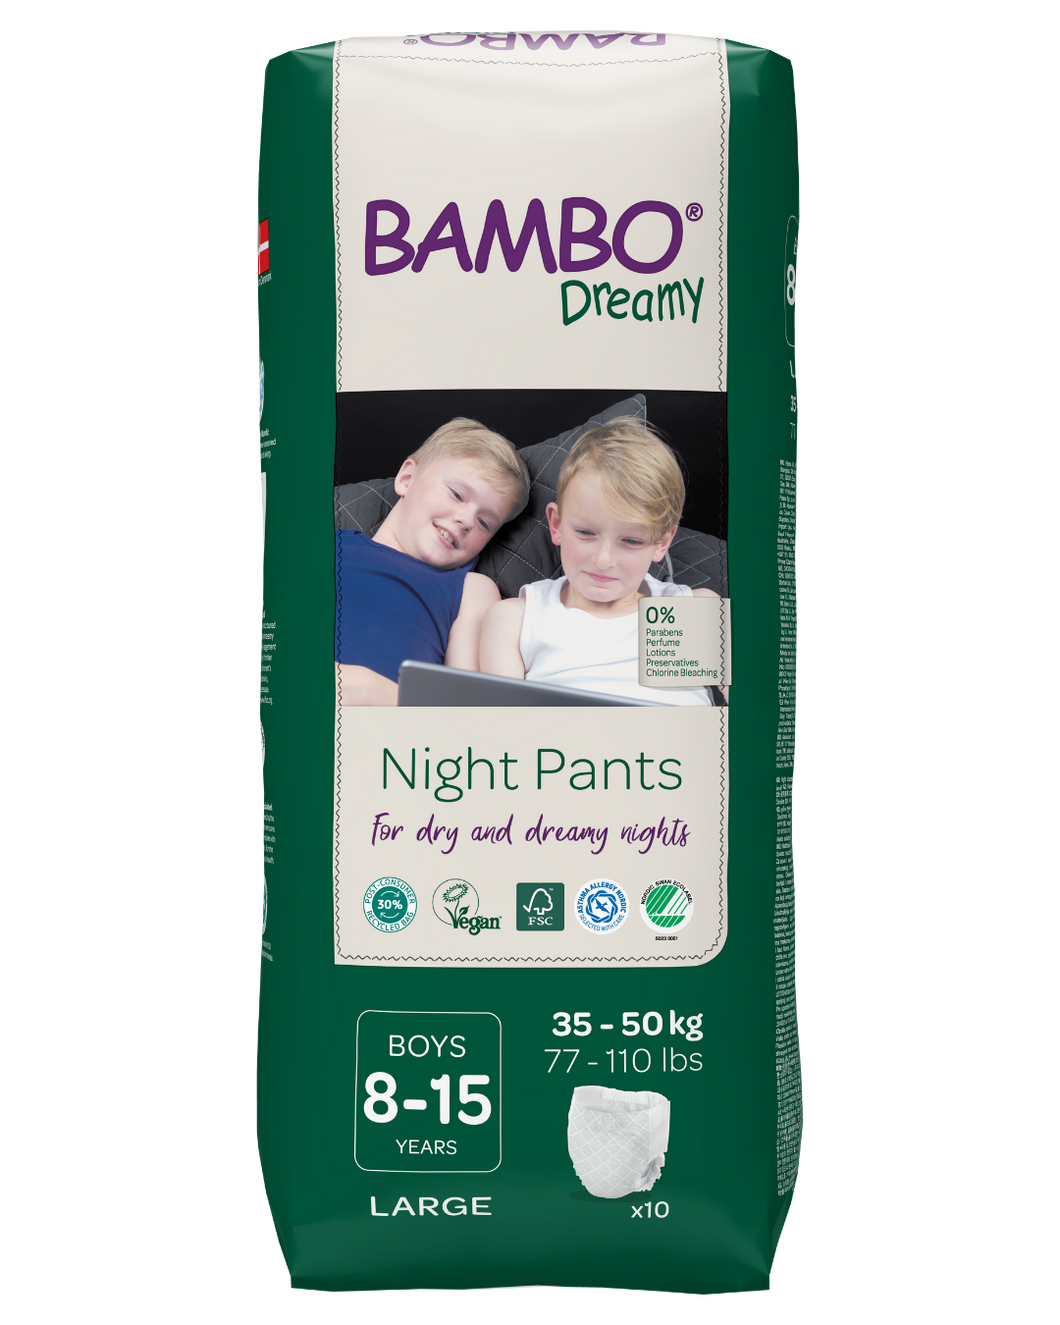 Bambo Dreamy Boy Night Pants (8-15 Years)